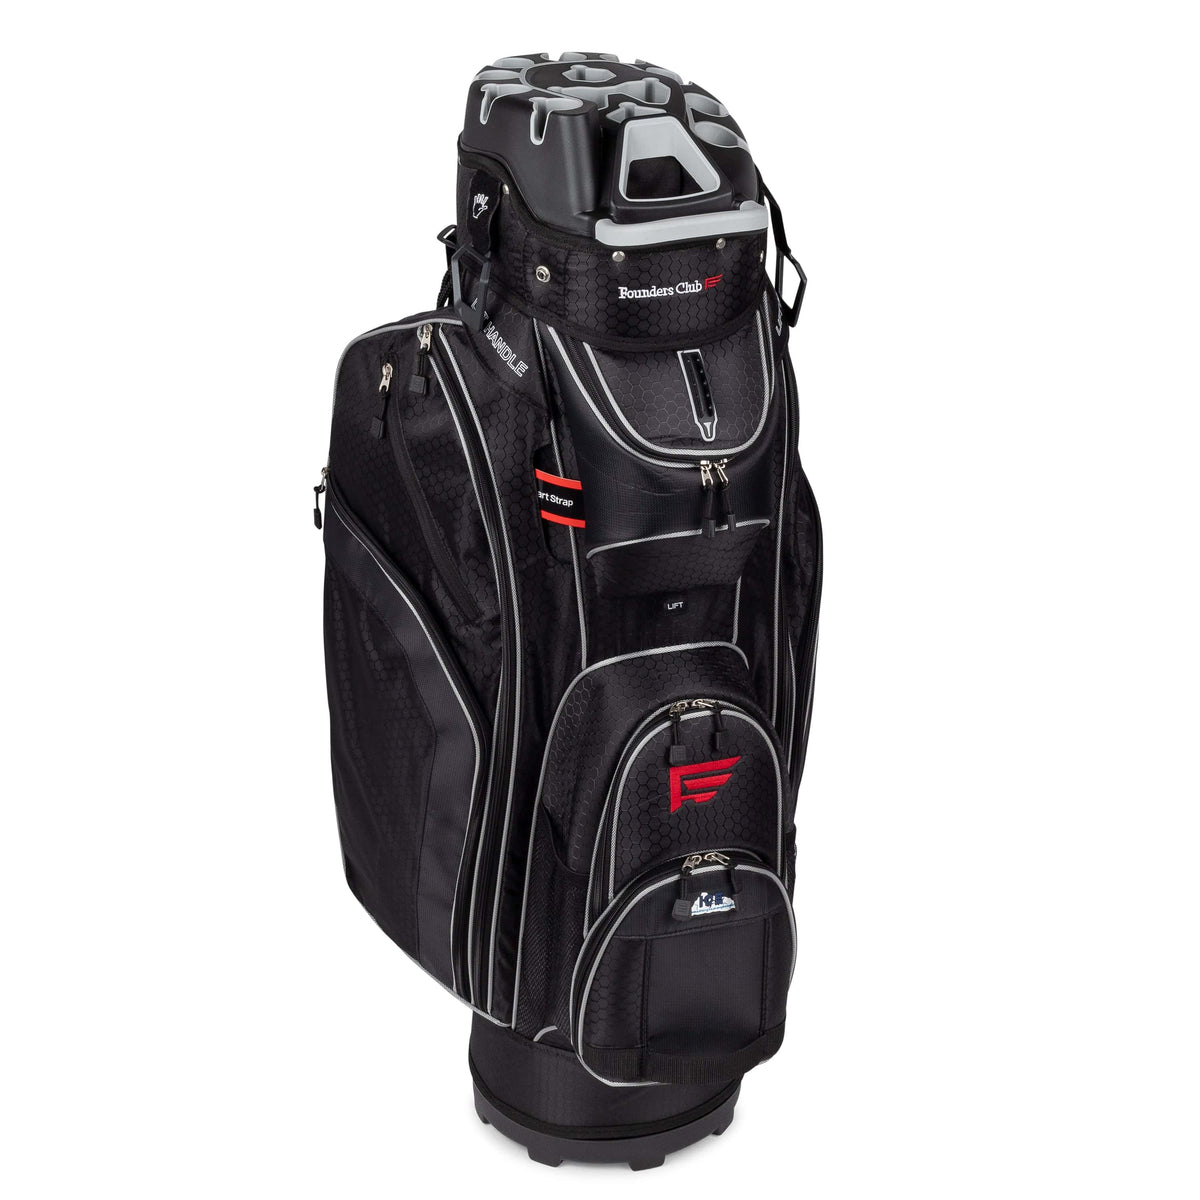 Founders Club Premium Organizer 14 Way Golf Cart Bag - Black